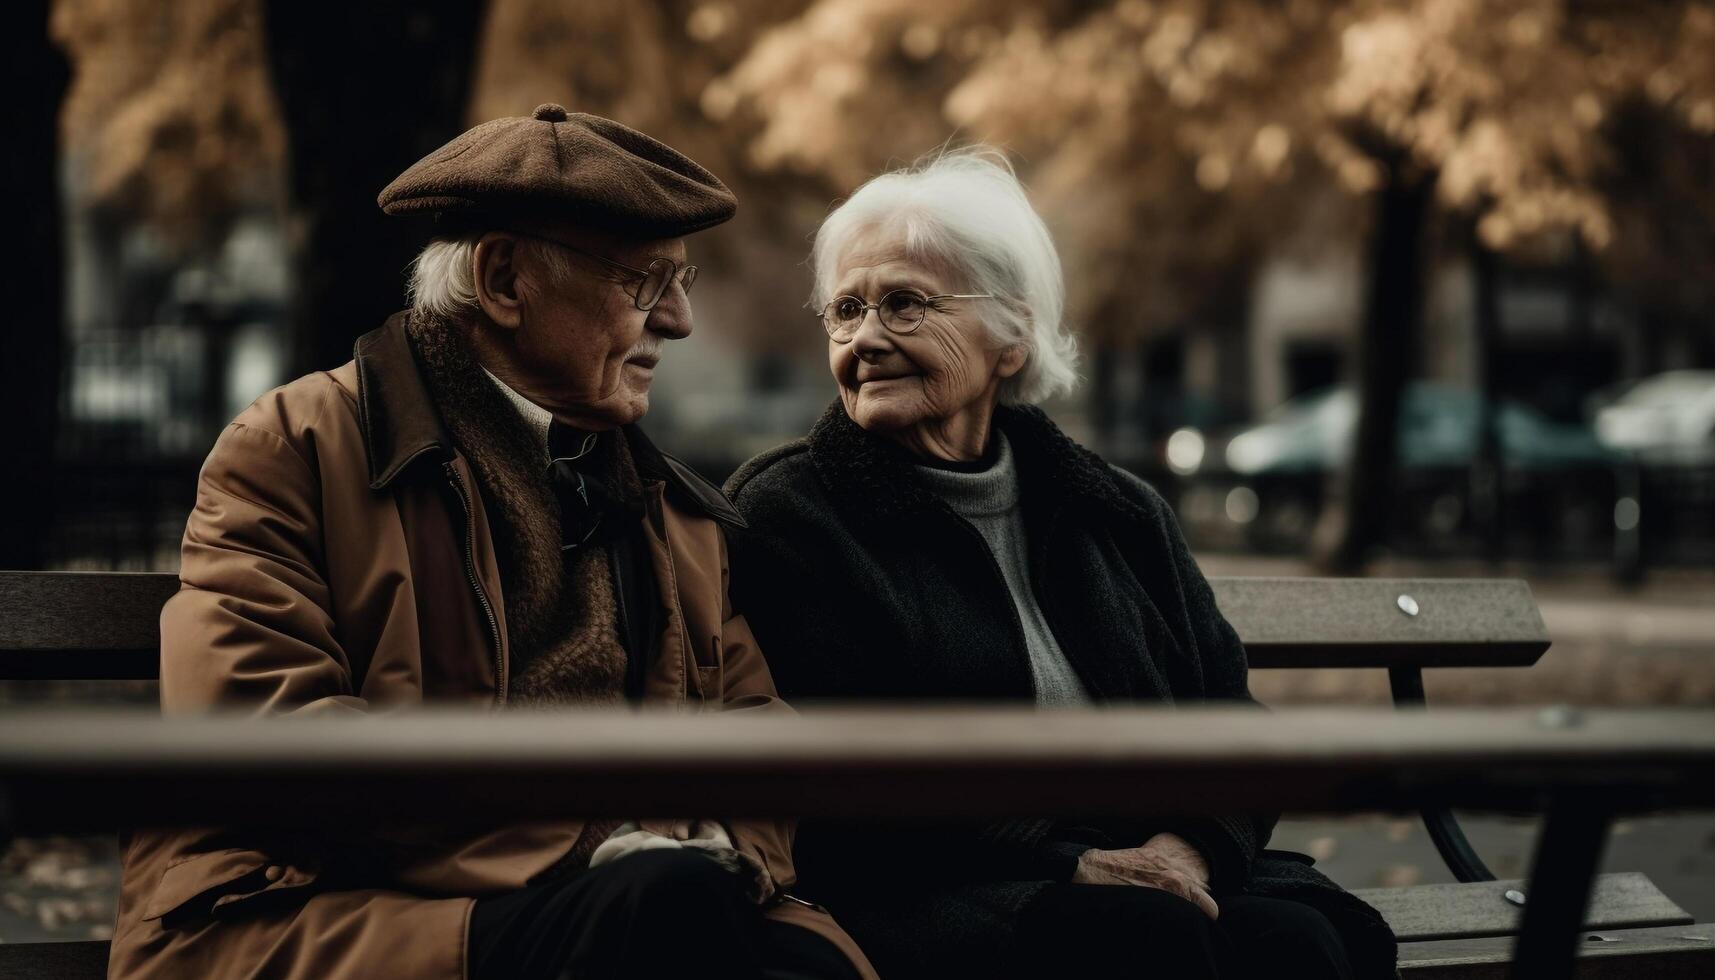 Senior couple enjoying autumn day on bench together generated by AI photo